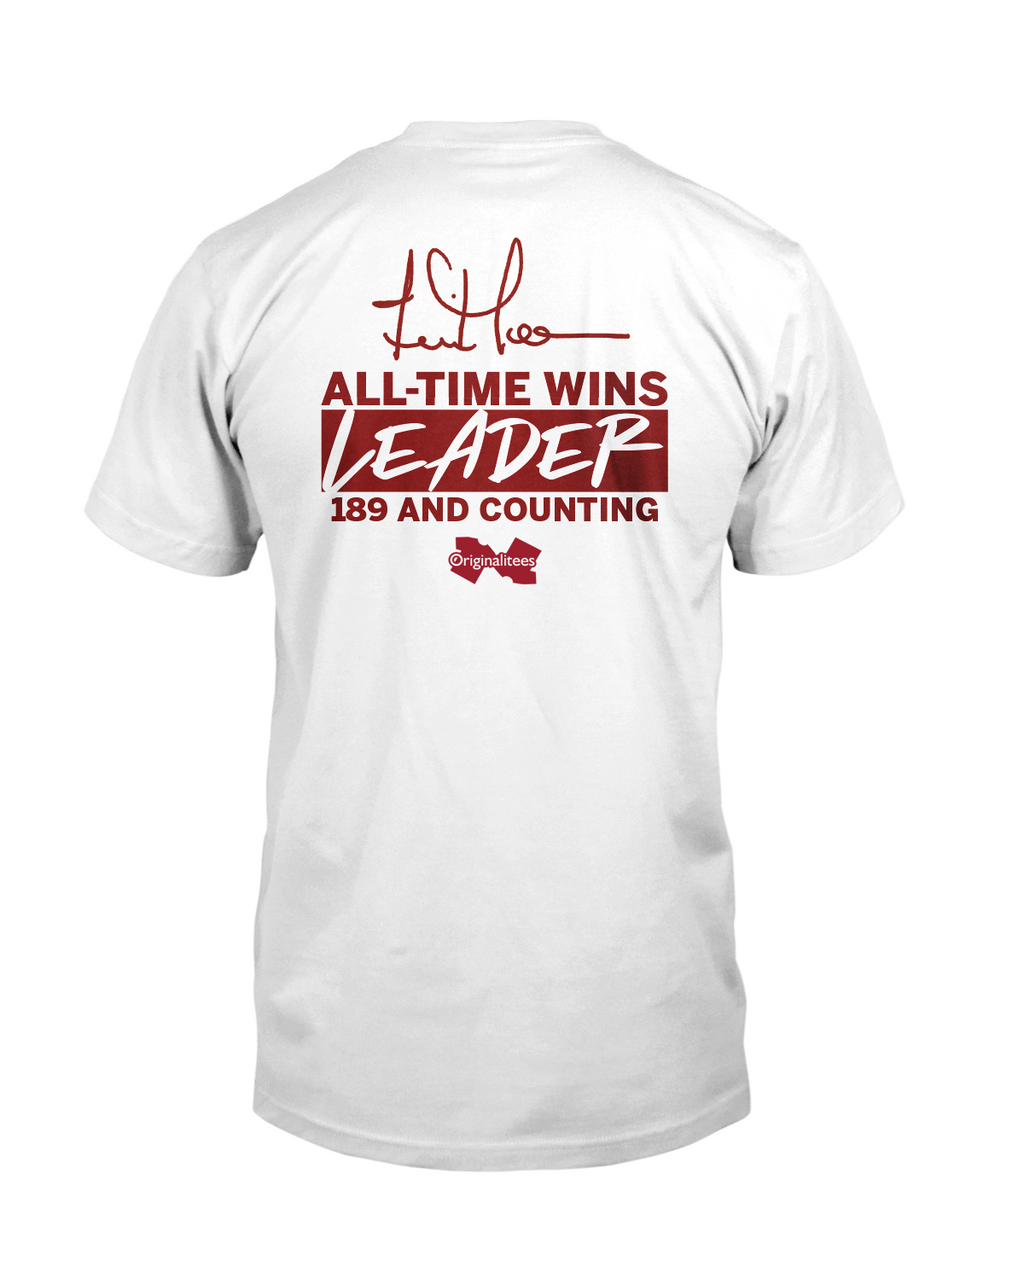 Coach Teri Moren All-Time Wins Leader Celebration Shirt